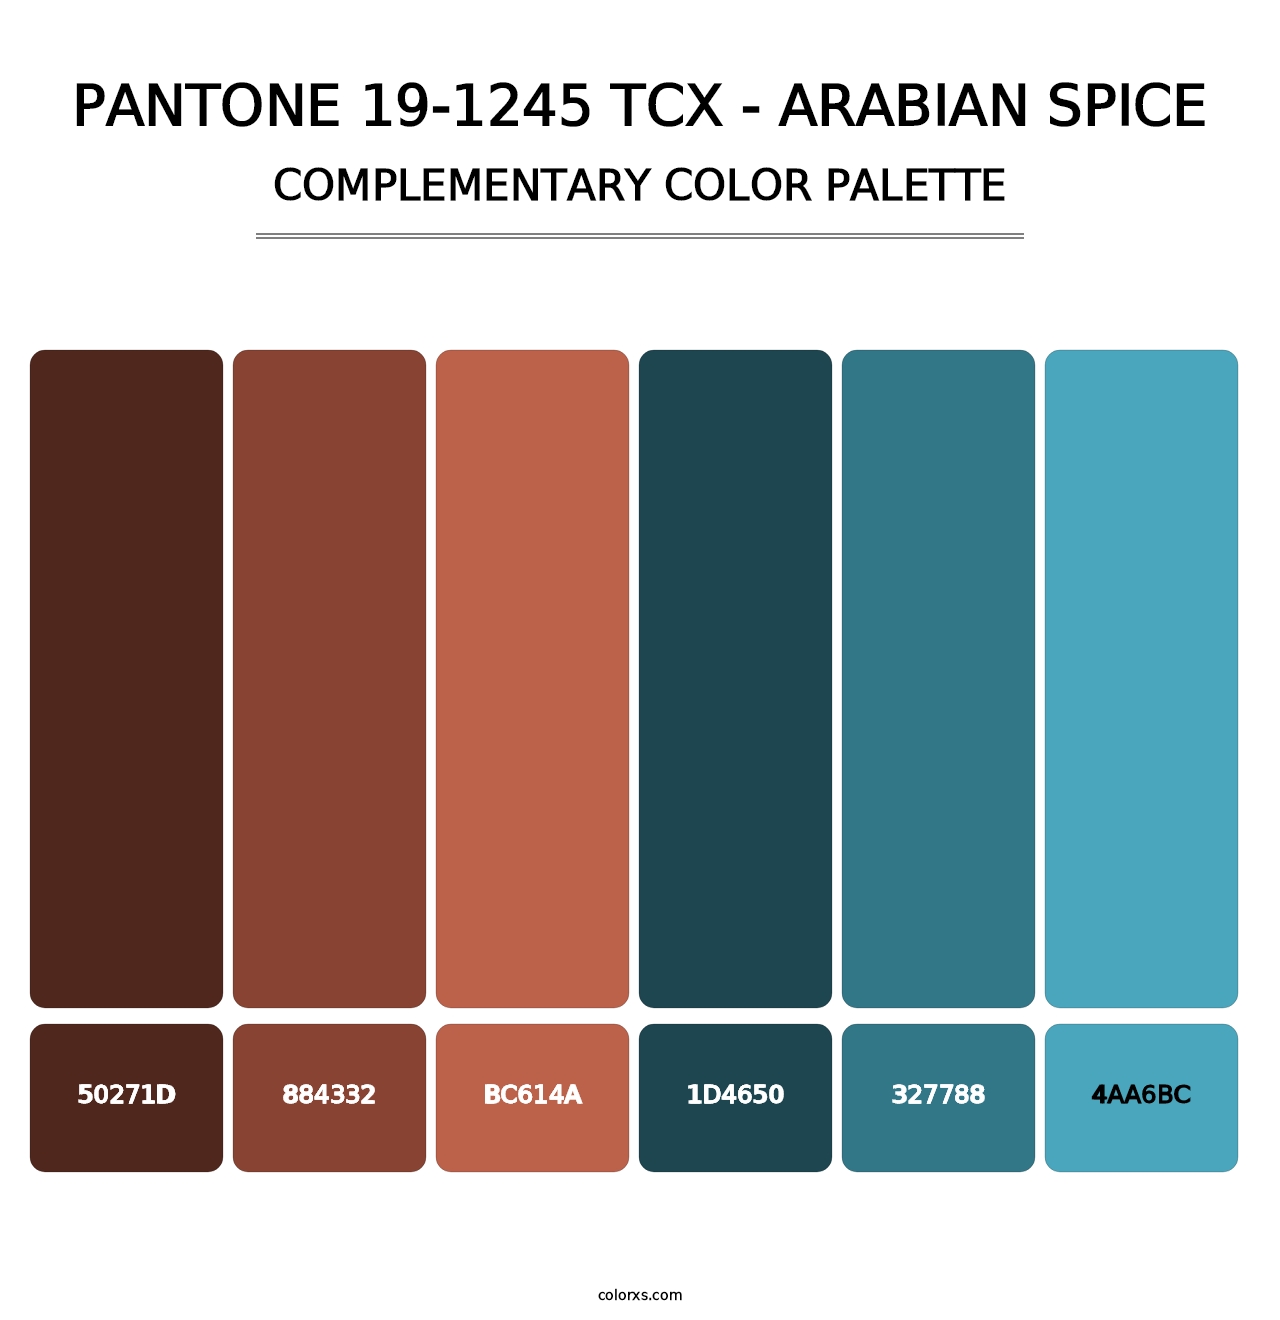 PANTONE 19-1245 TCX - Arabian Spice - Complementary Color Palette